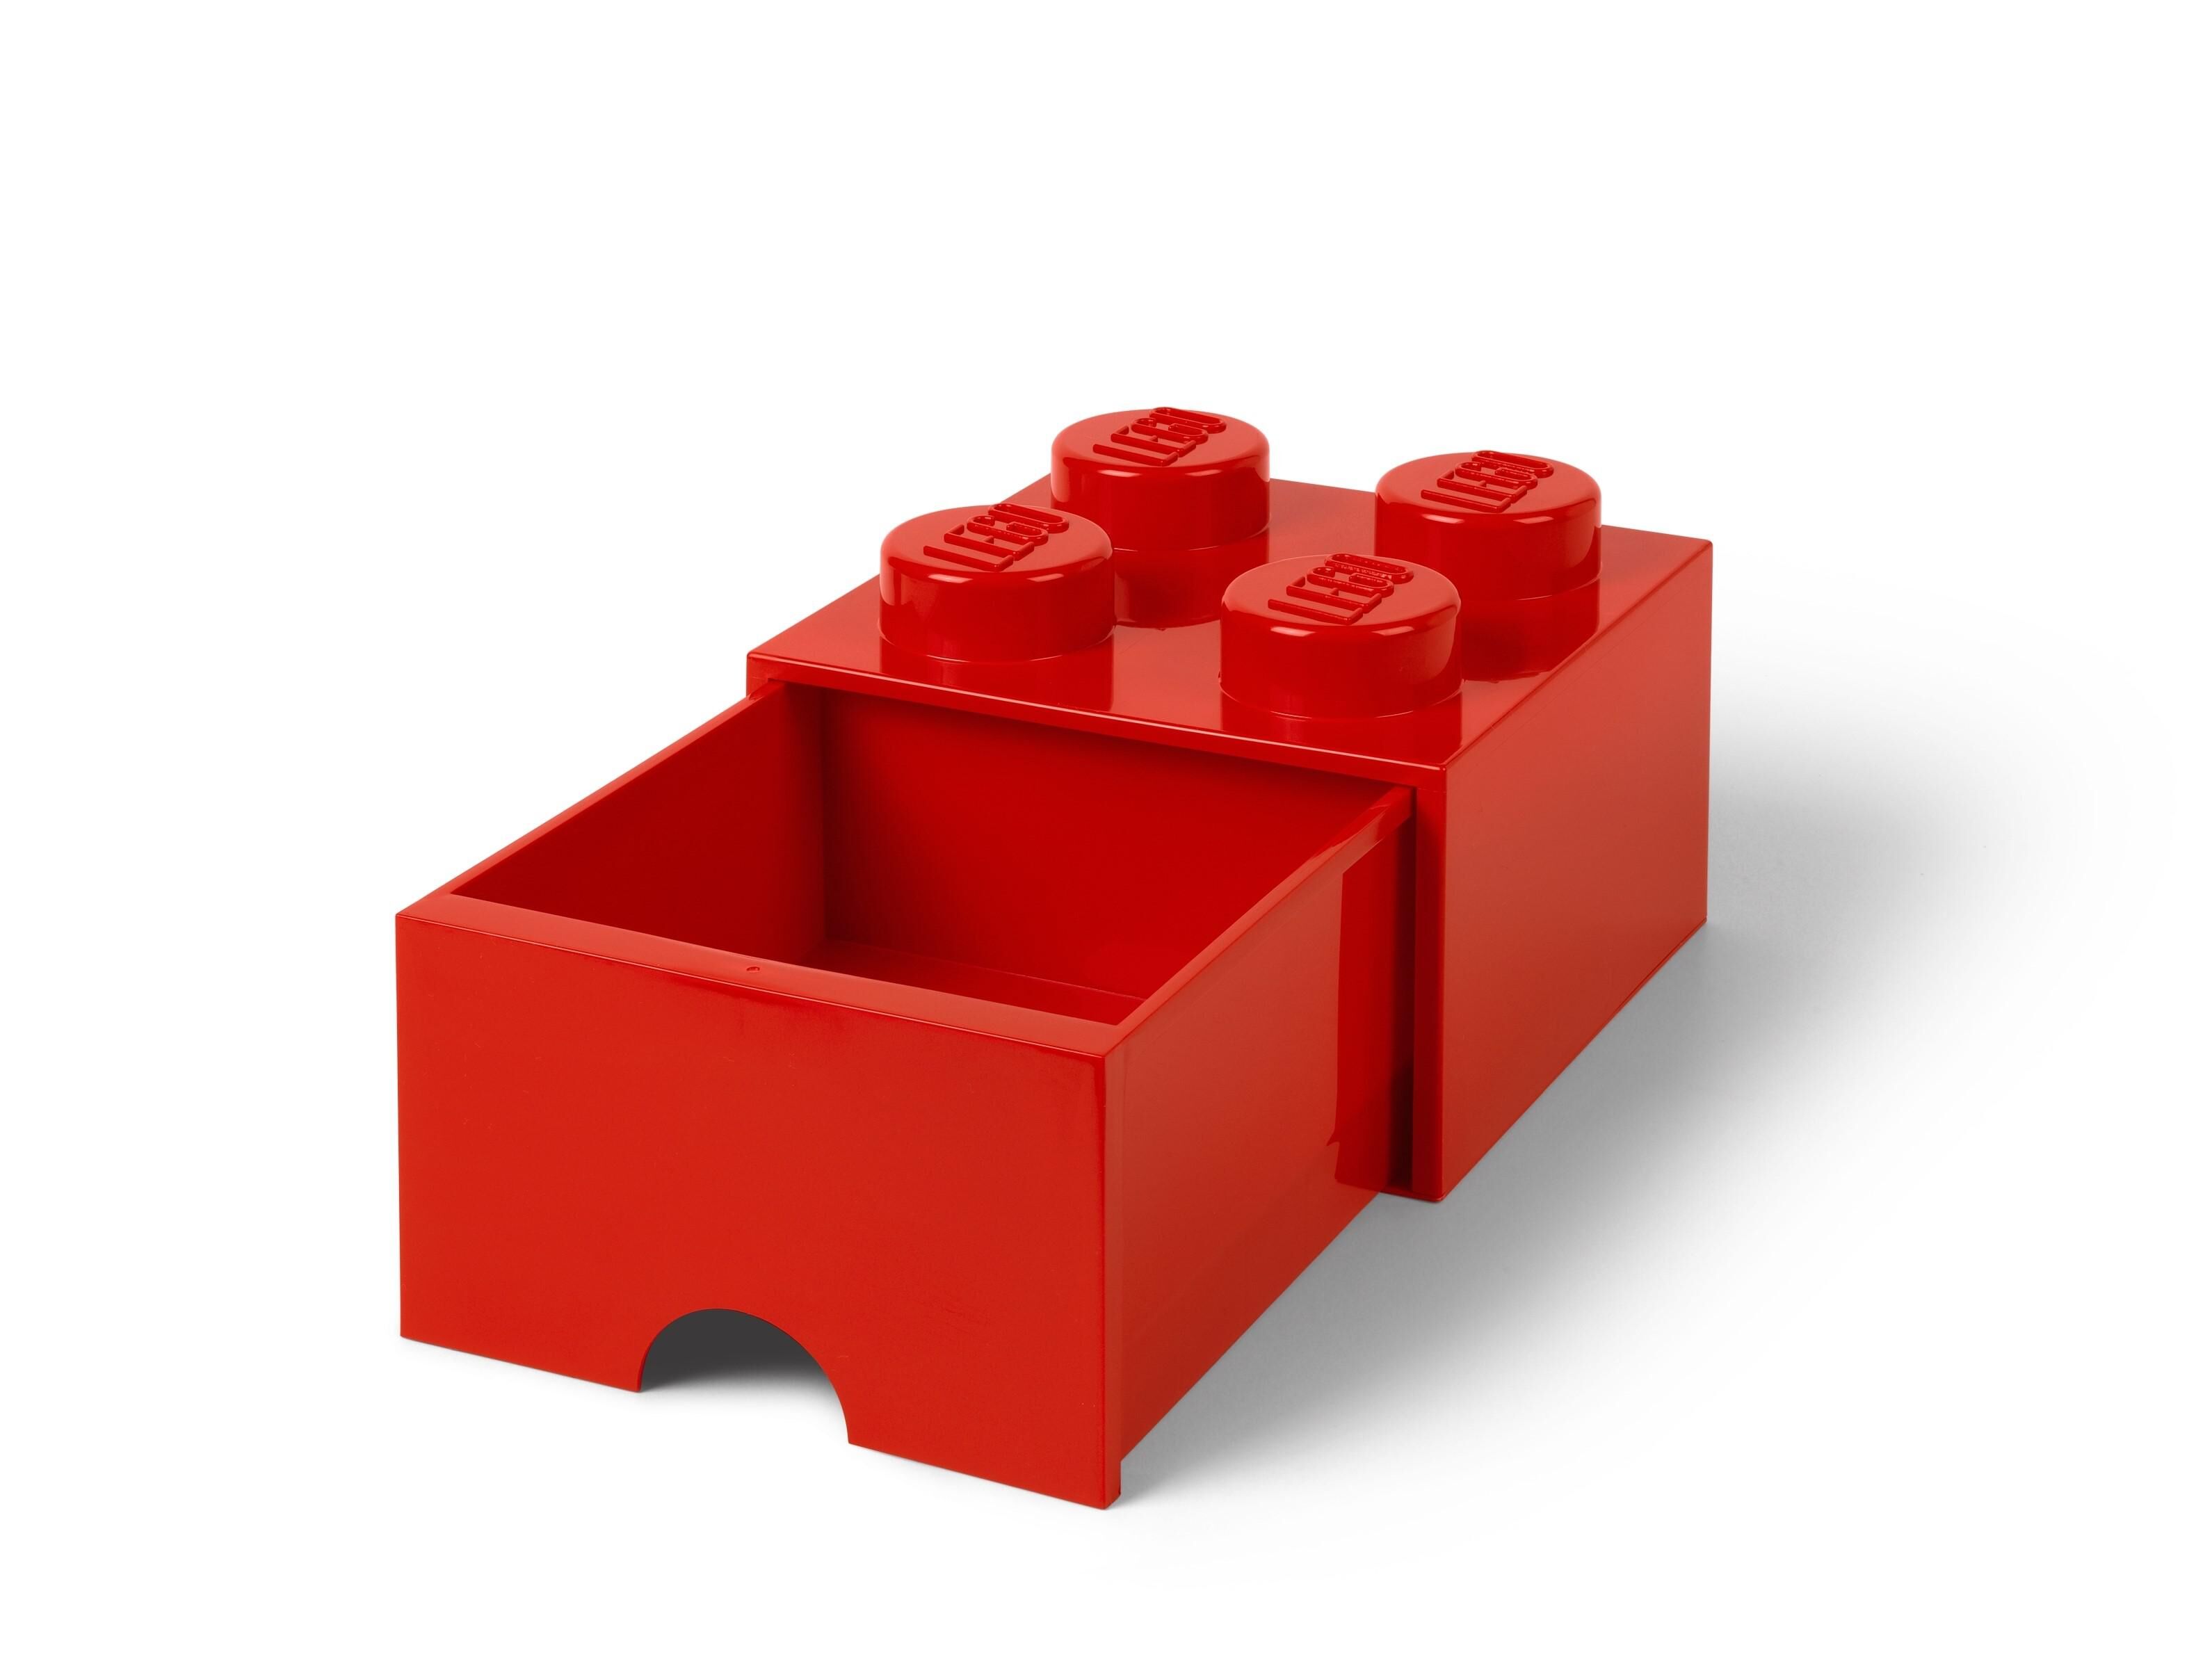 LEGO® 8-Stud Storage Brick – Aqua Blue 5005721, Other